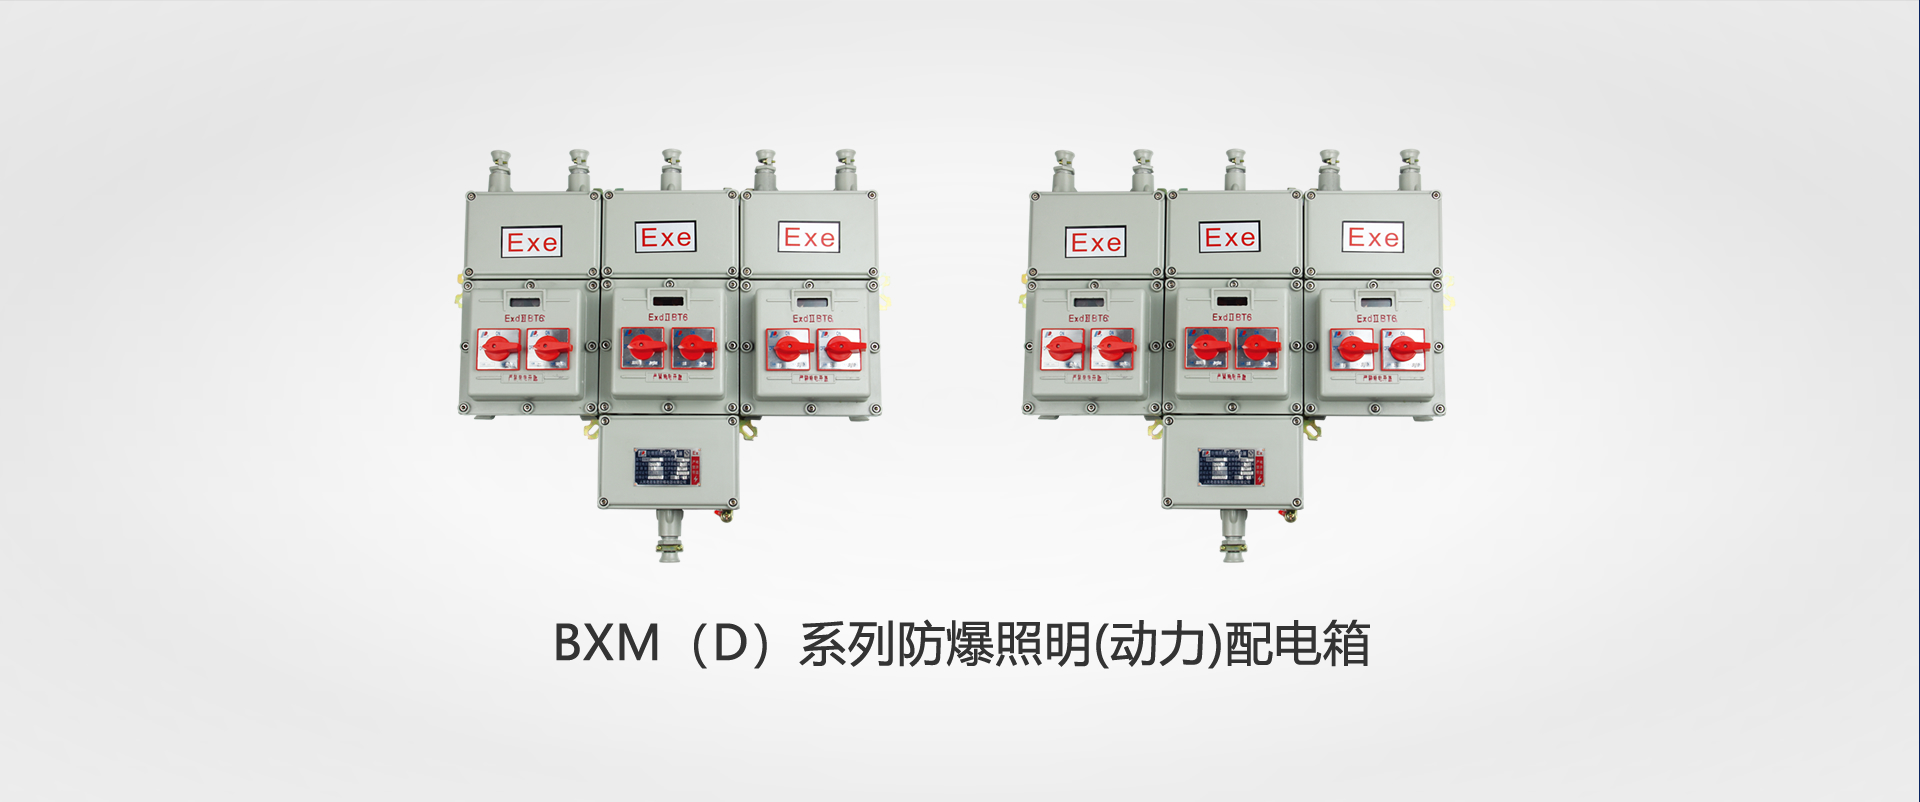 BXM（D）系列防爆照明(ming)(動力)配(pei)電箱(xiang)